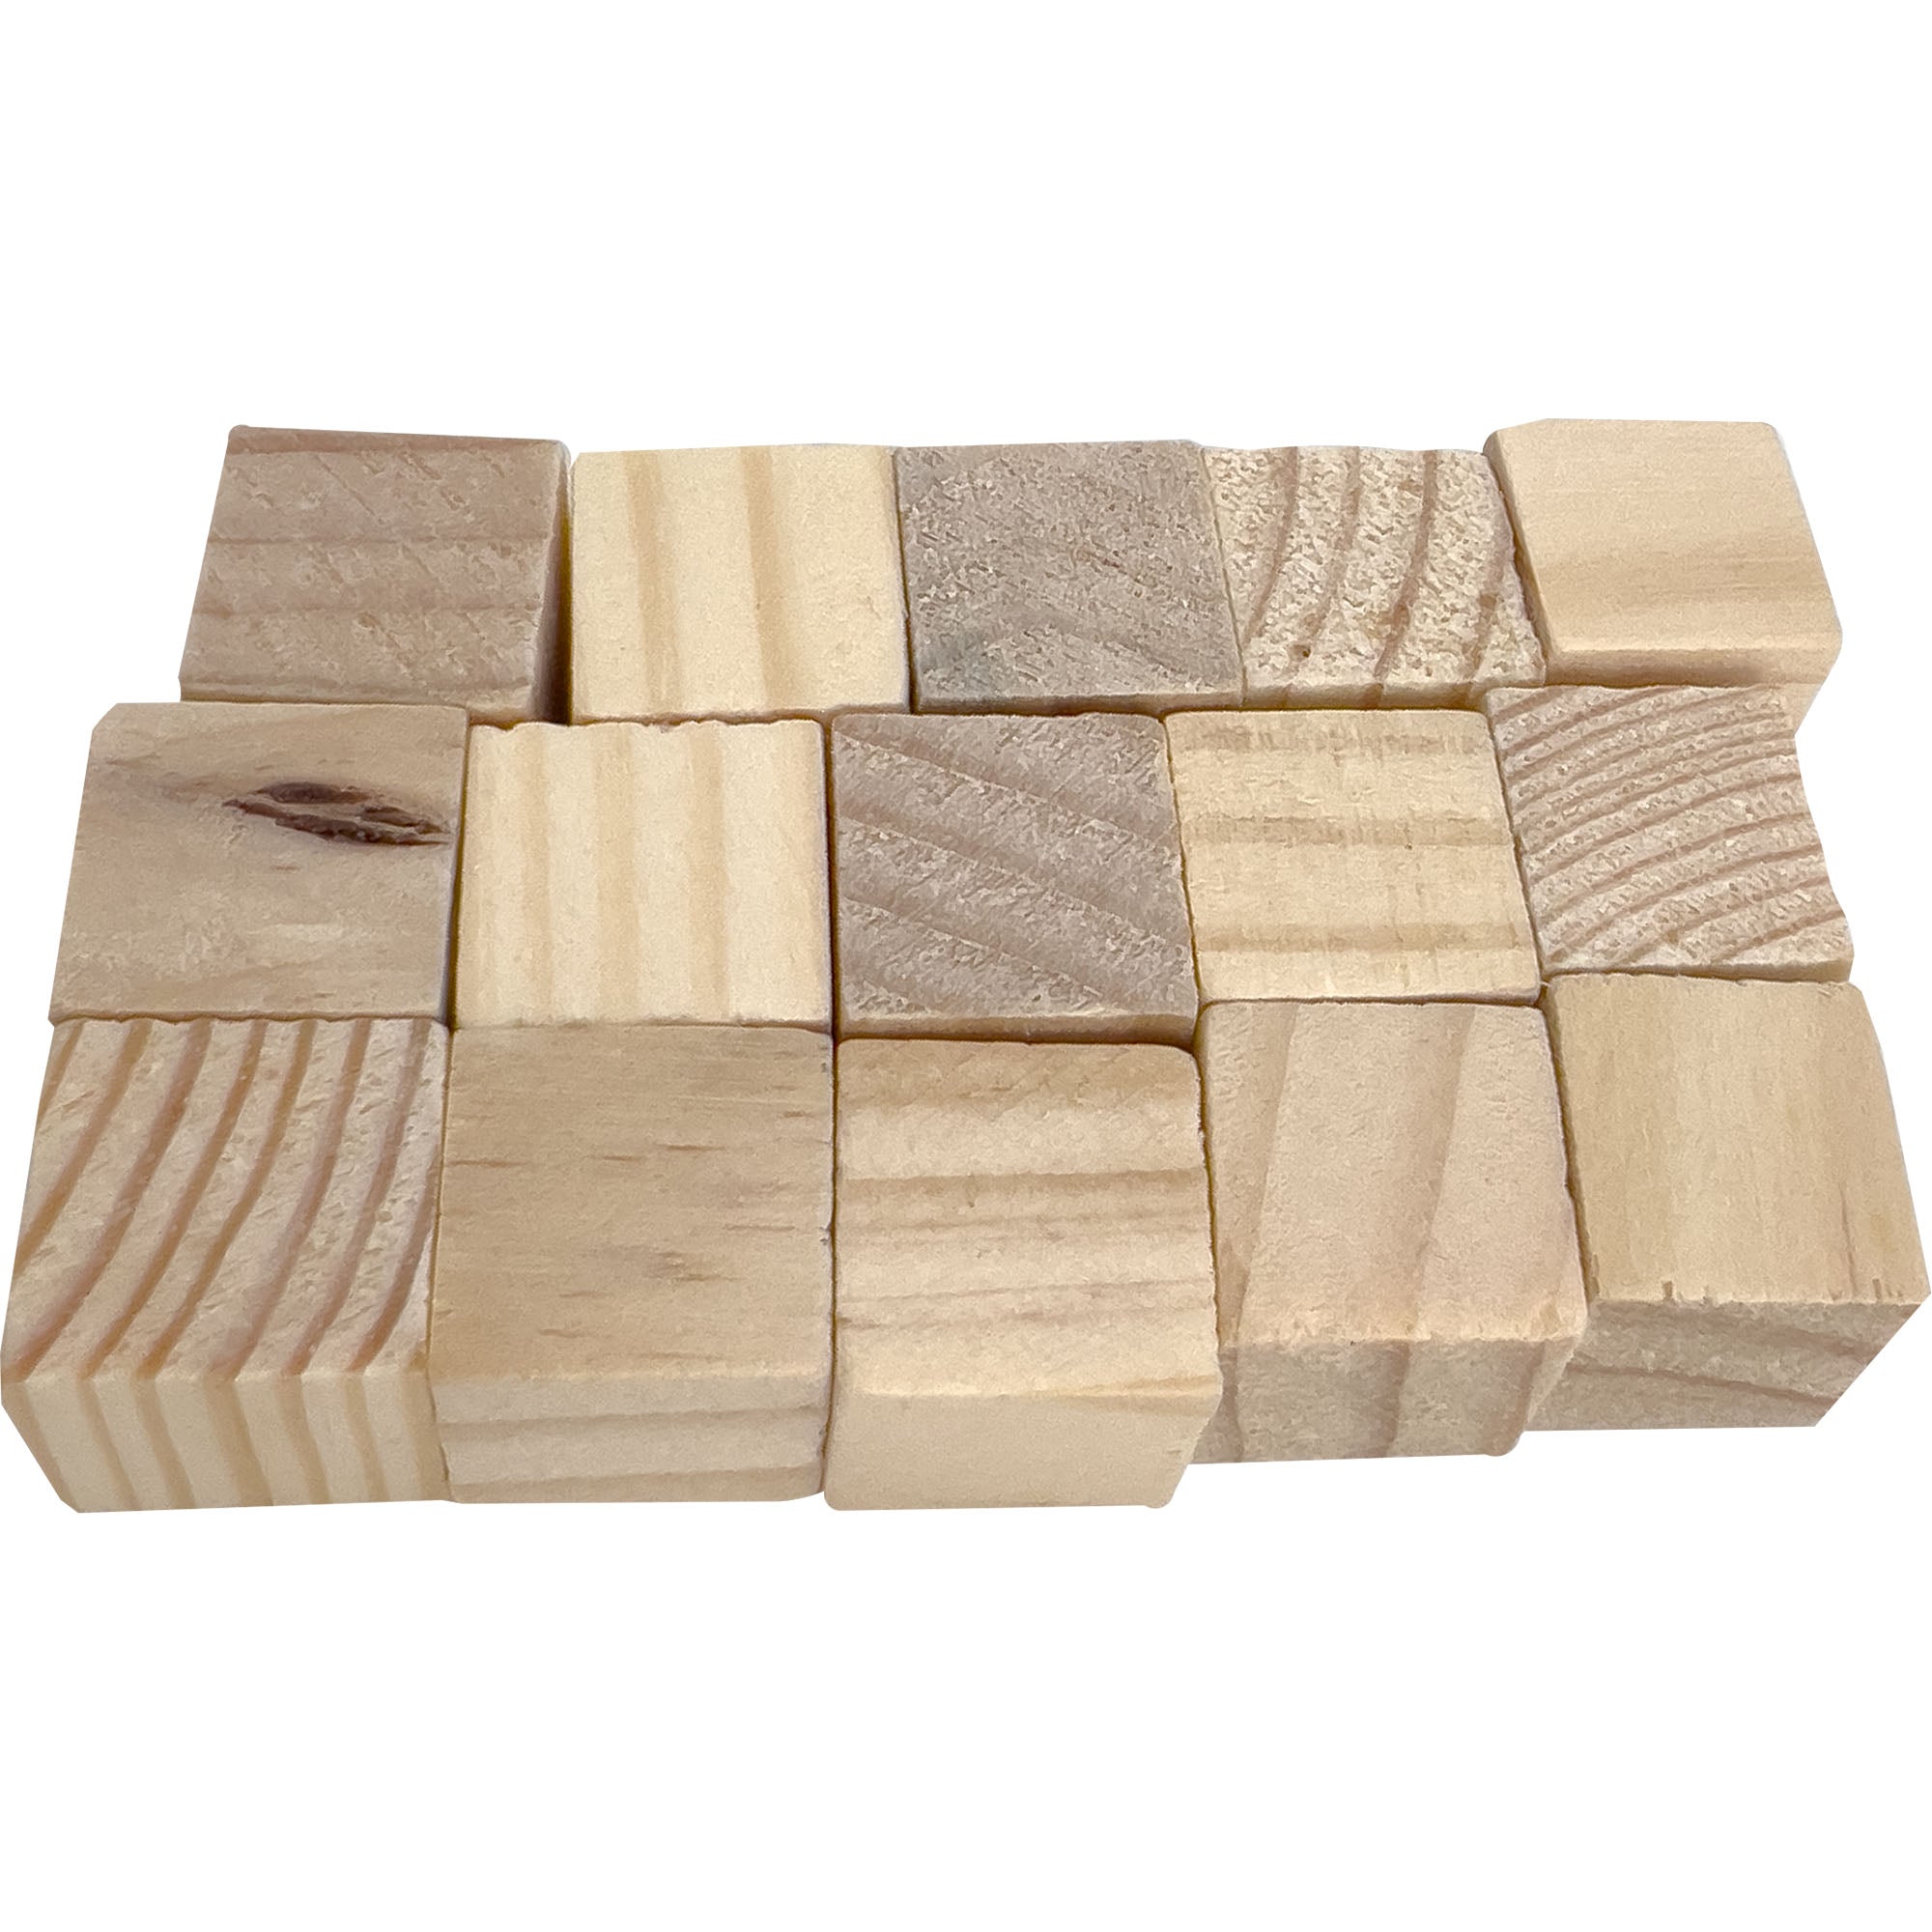 2061 Pk15 Mini Wood Cubes